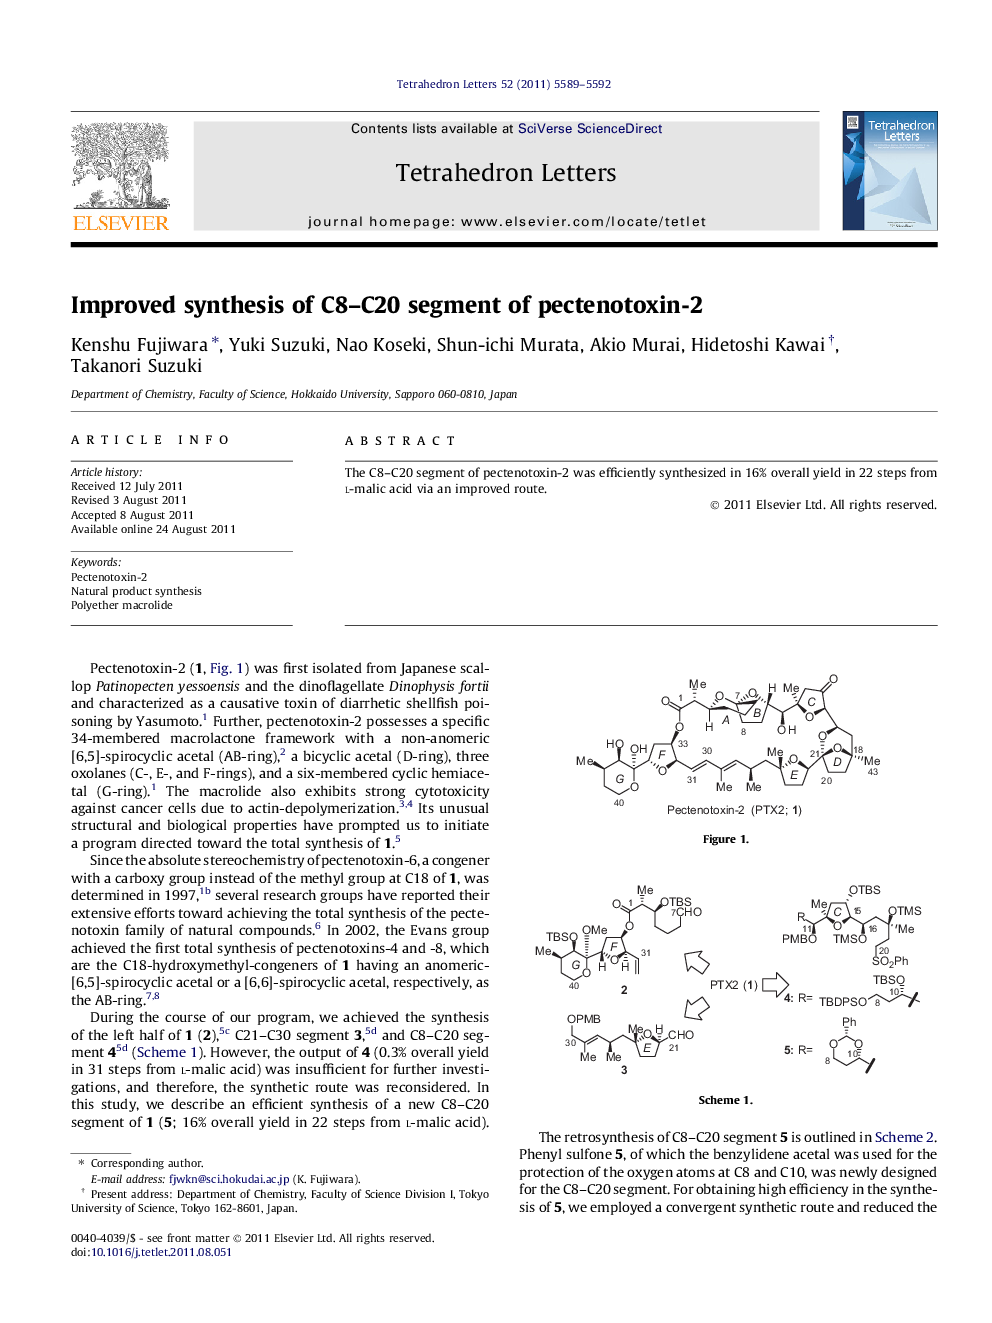 Improved synthesis of C8-C20 segment of pectenotoxin-2